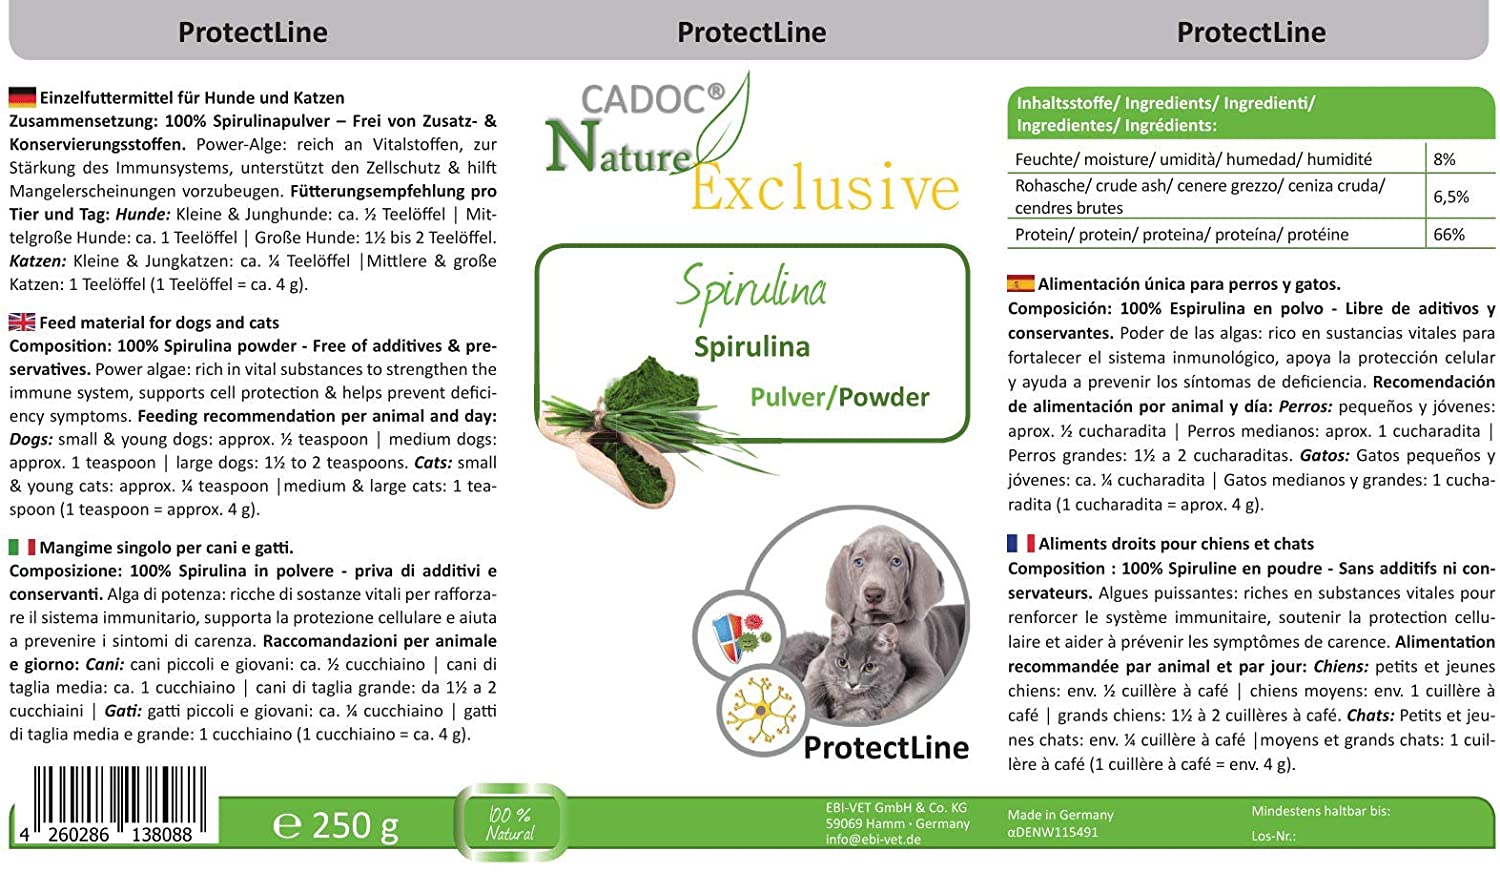  Cadoc - Nature Exclusive Espirulina 